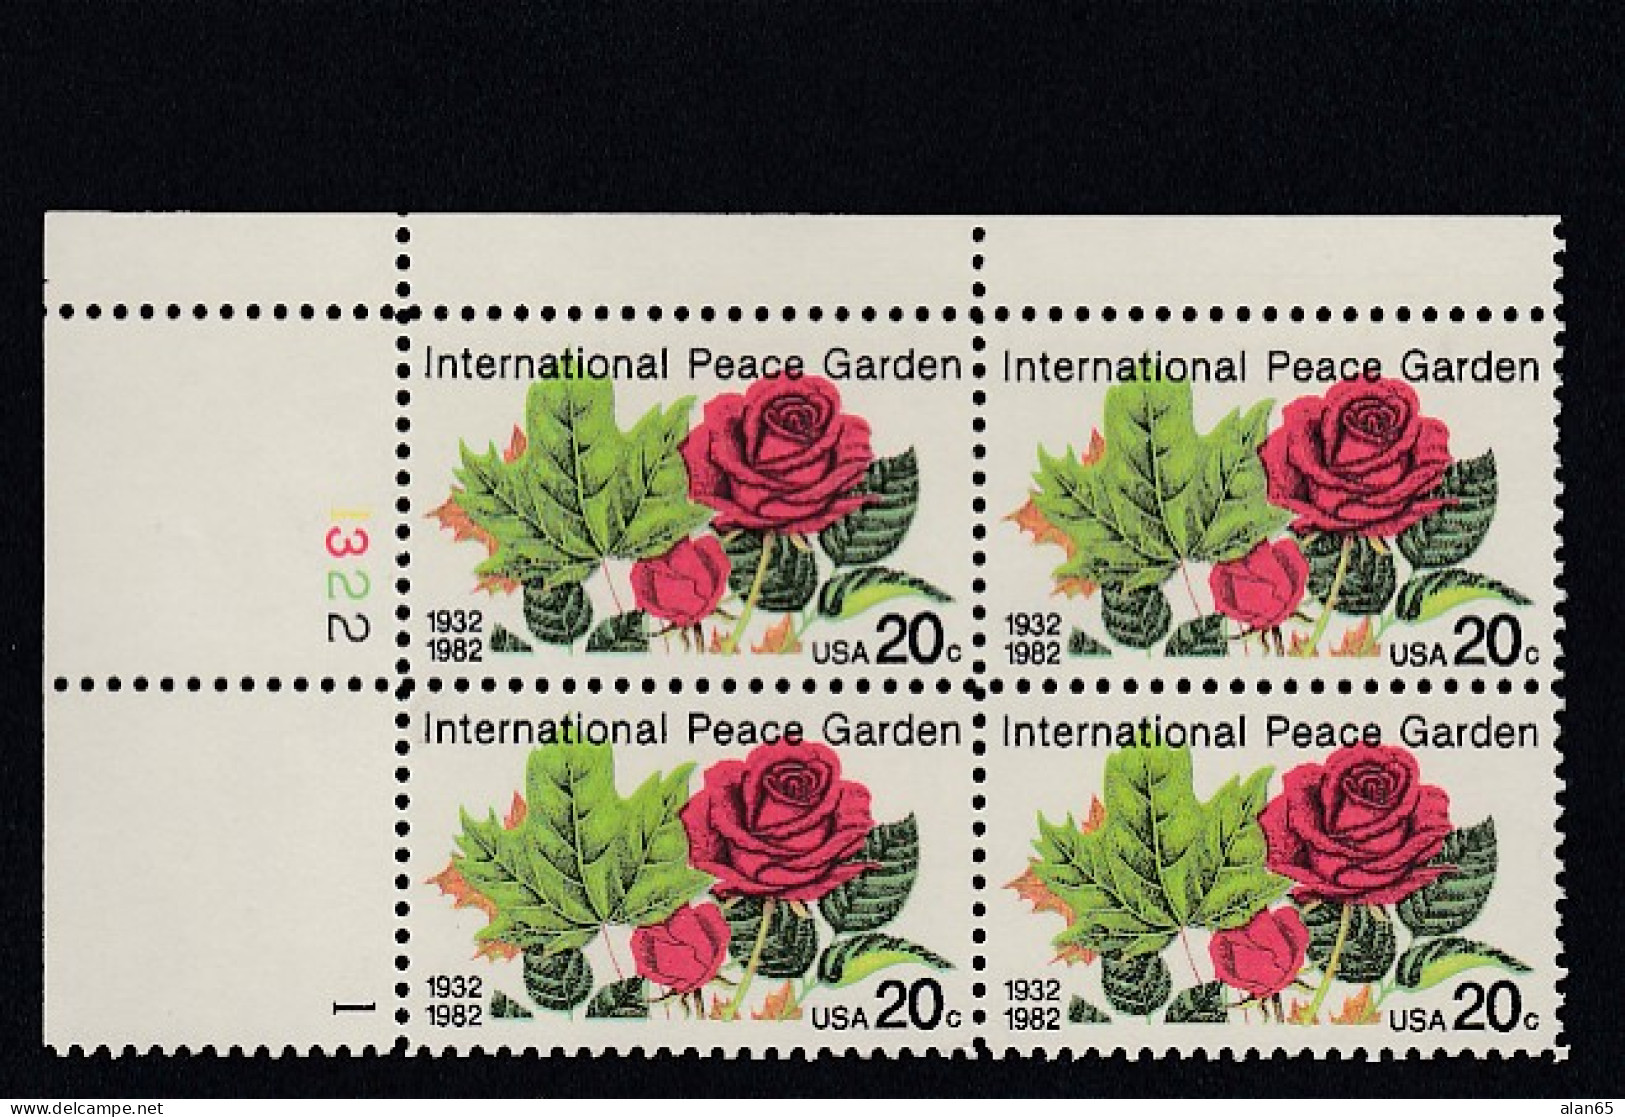 Sc#2014, Plate # Block Of 4 20-cent, International Peace Garden, Flowers Rose, US Postage Stamps - Números De Placas